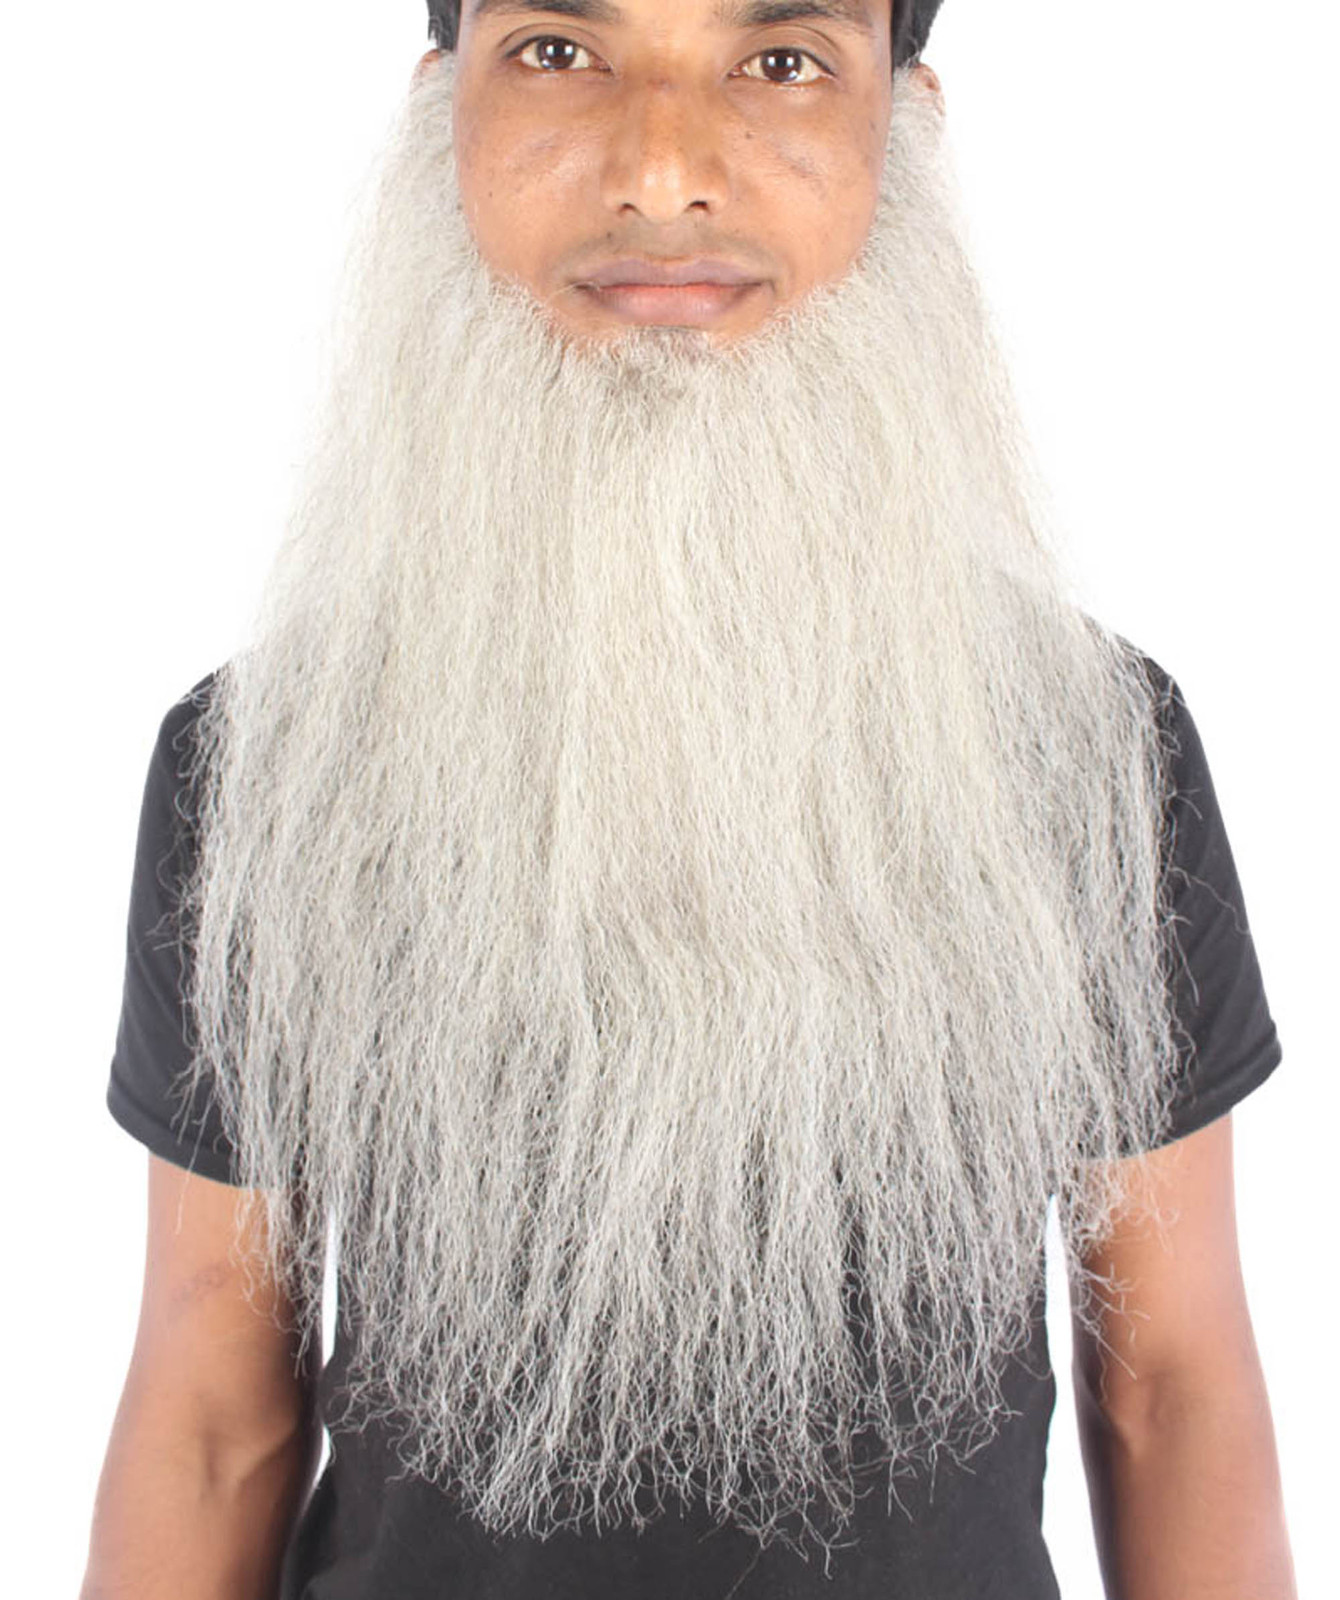 Men's Synthetic Hair Long Beard Cosplay Facial Hair Multiple Color Options